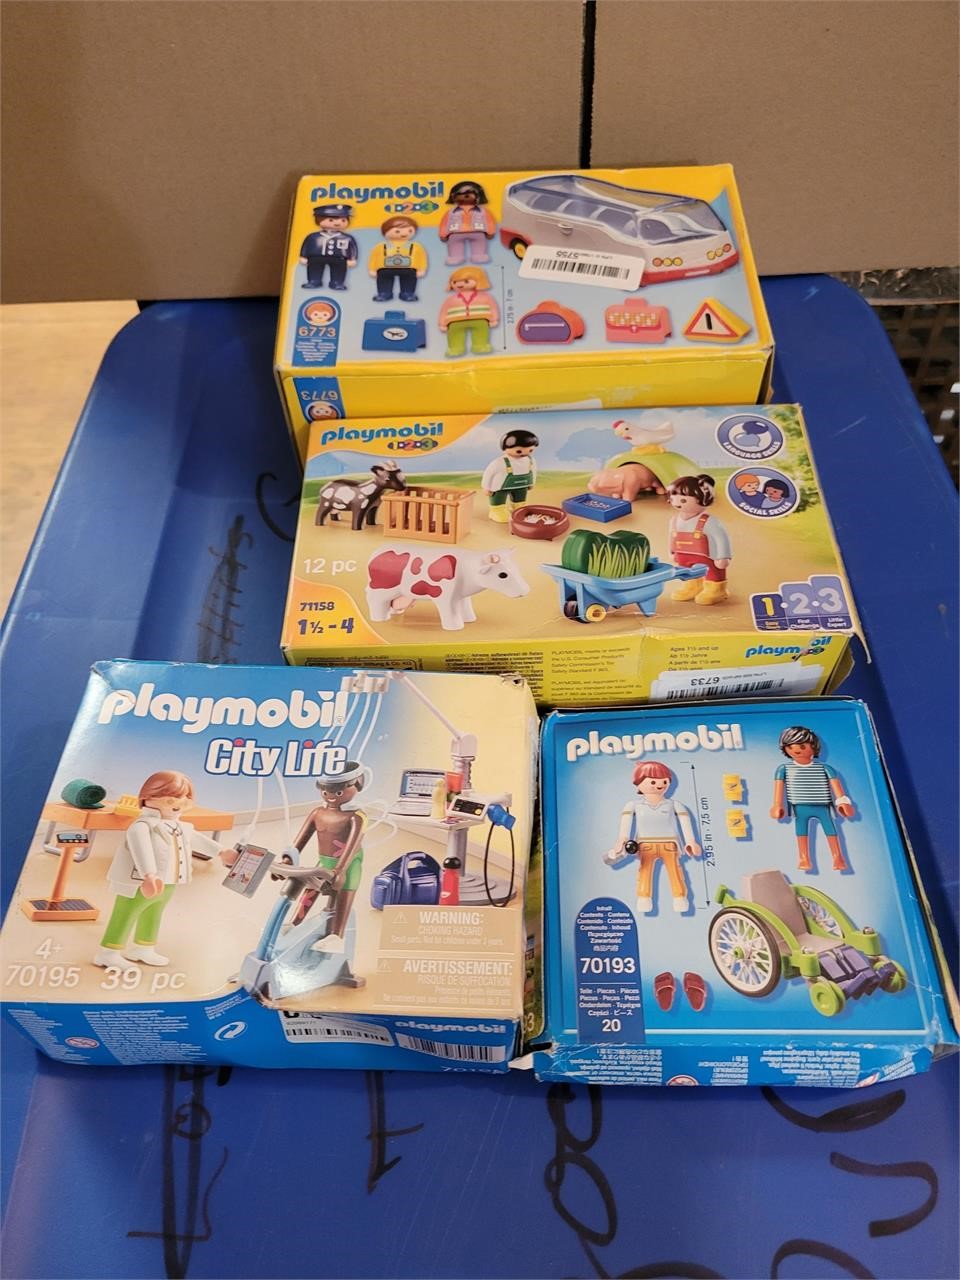 4 Playmobil Play Sets